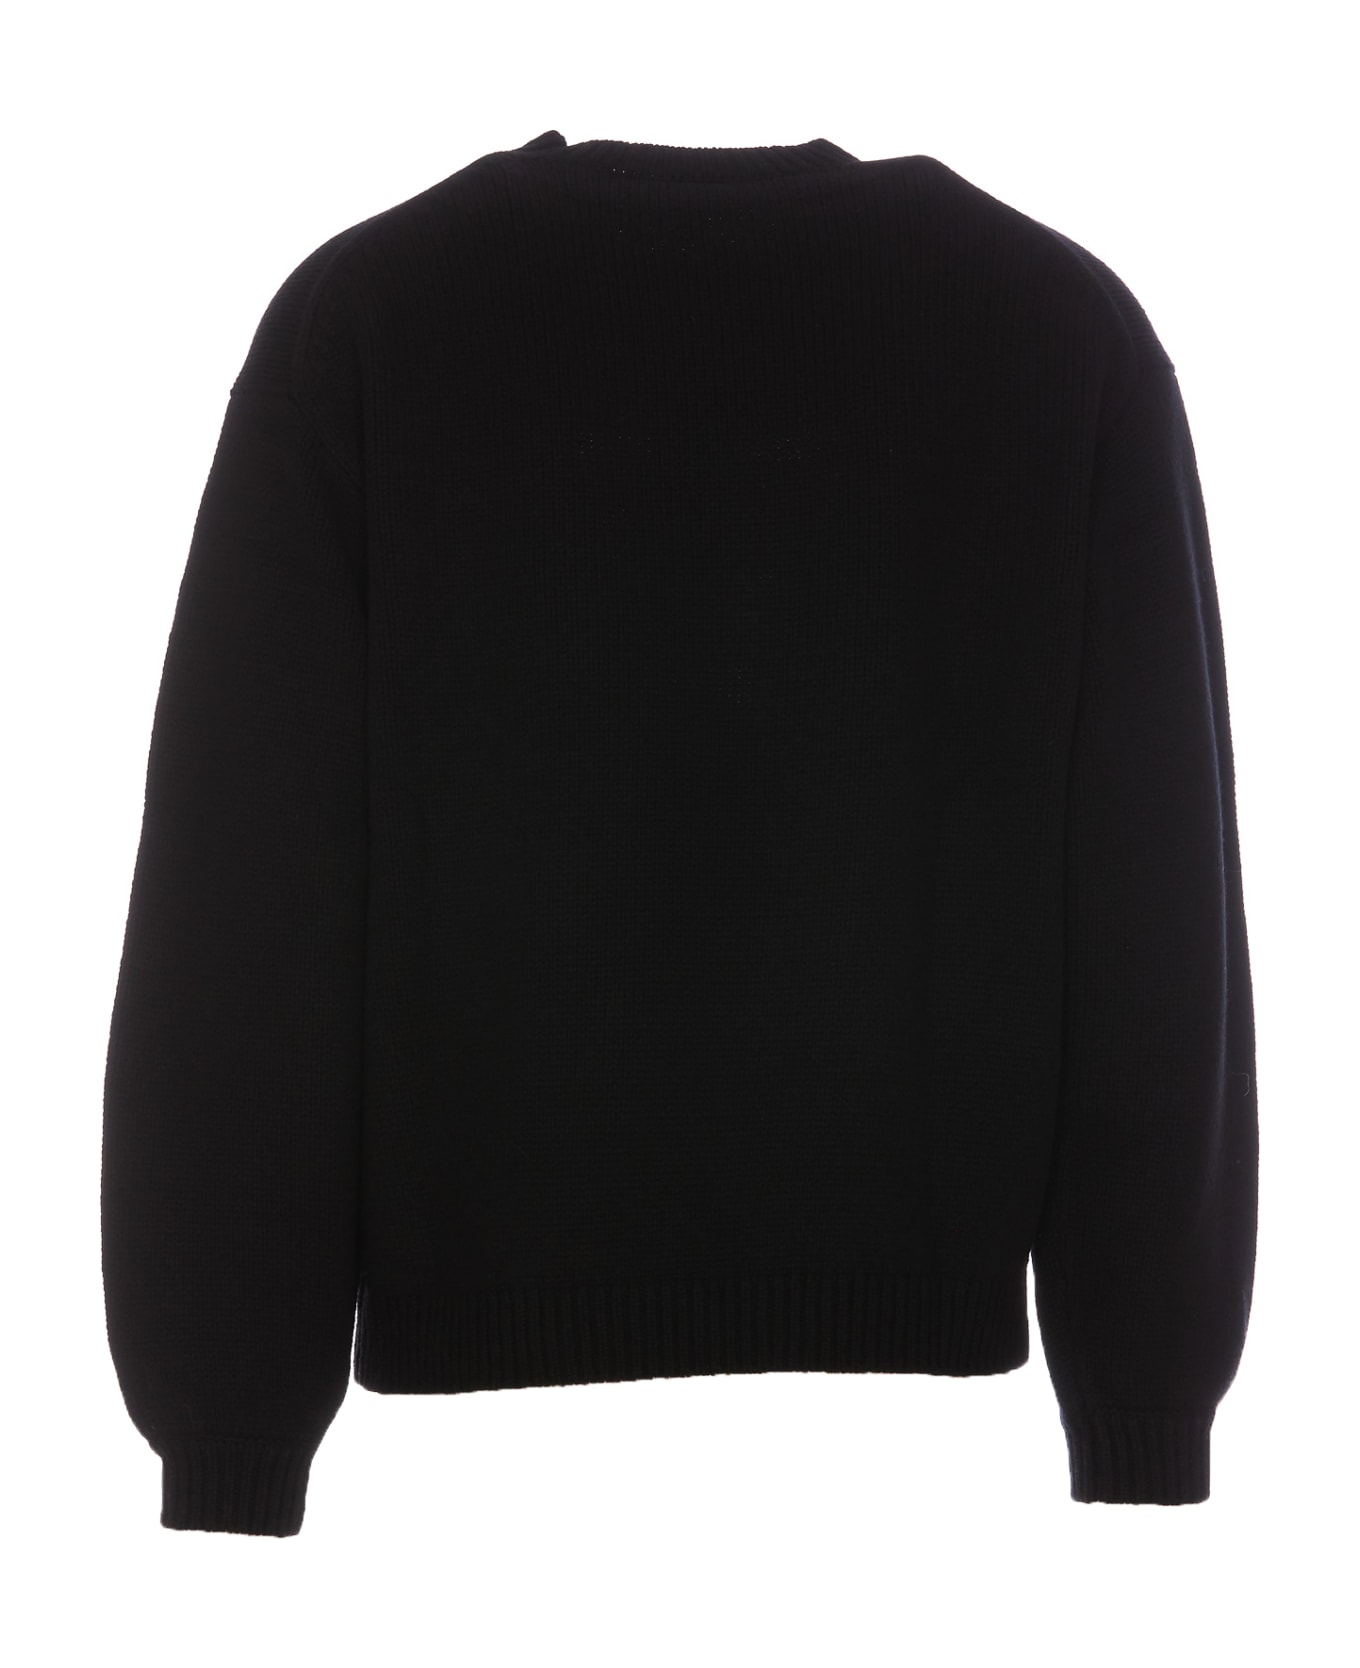 Kenzo Paris Sweater - BLACK フリース